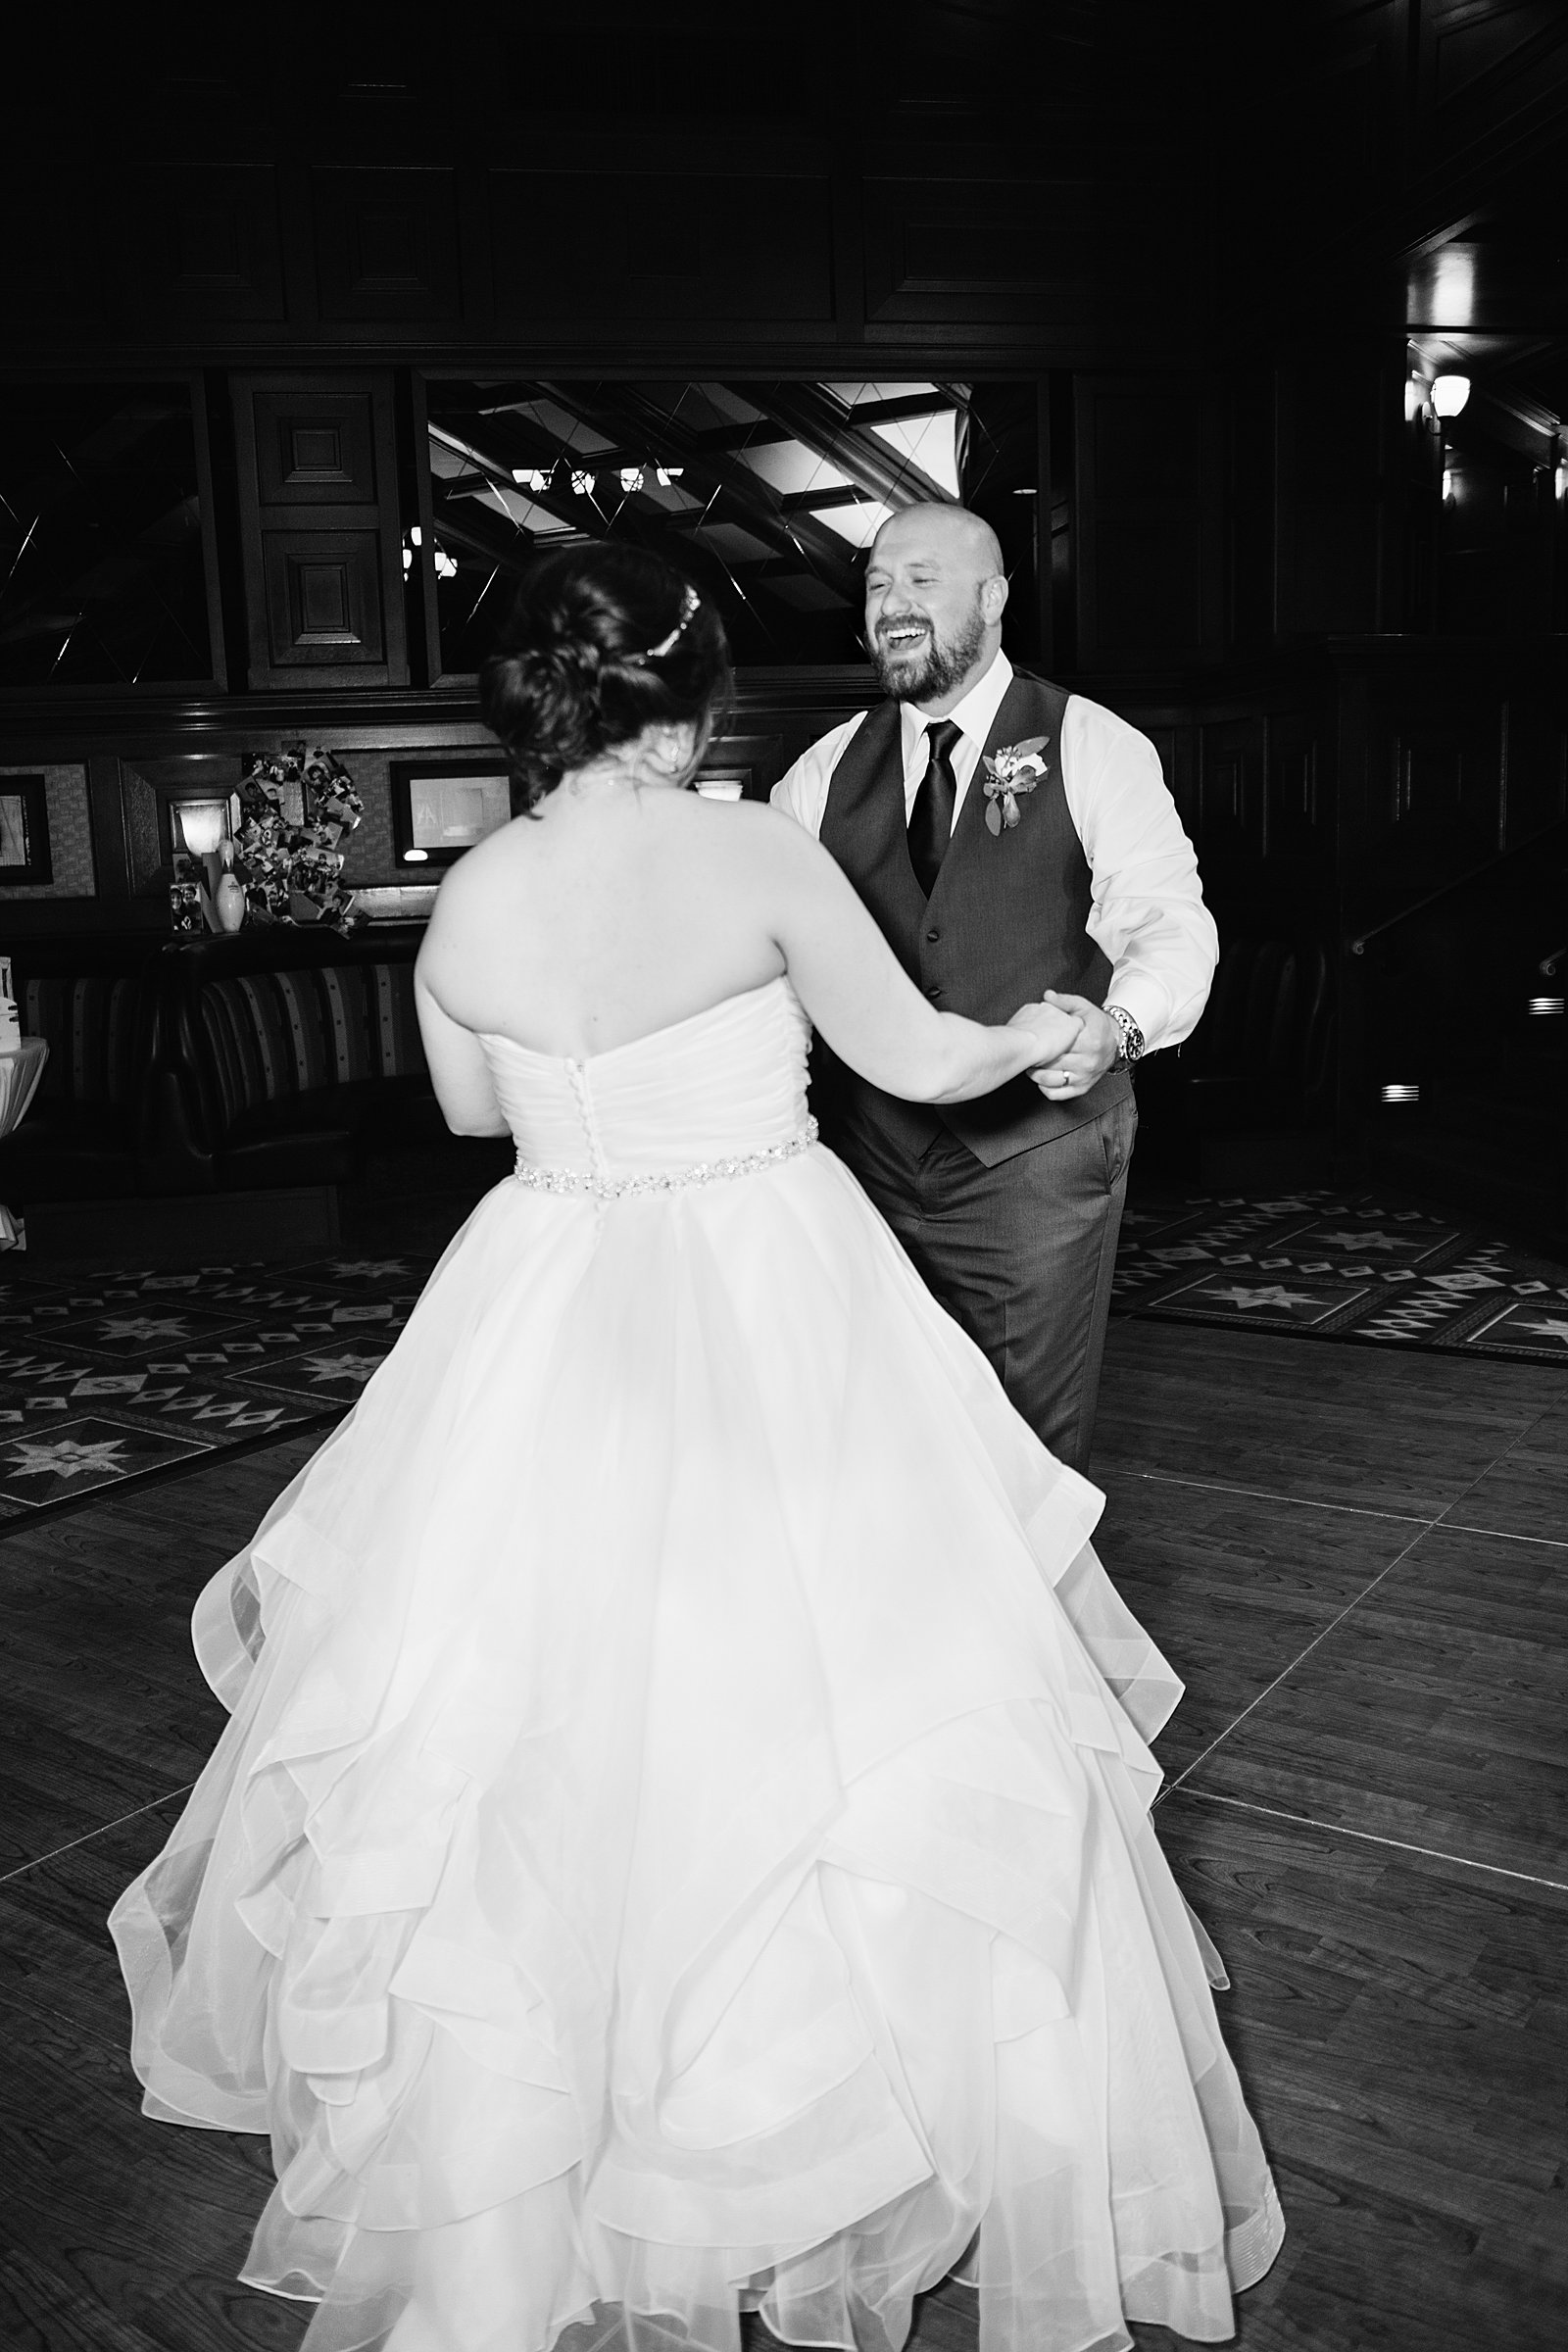 Bride and Groom sharing first dance at their Arizona Grand Resort wedding reception by Arizona wedding photographer PMA Photography.